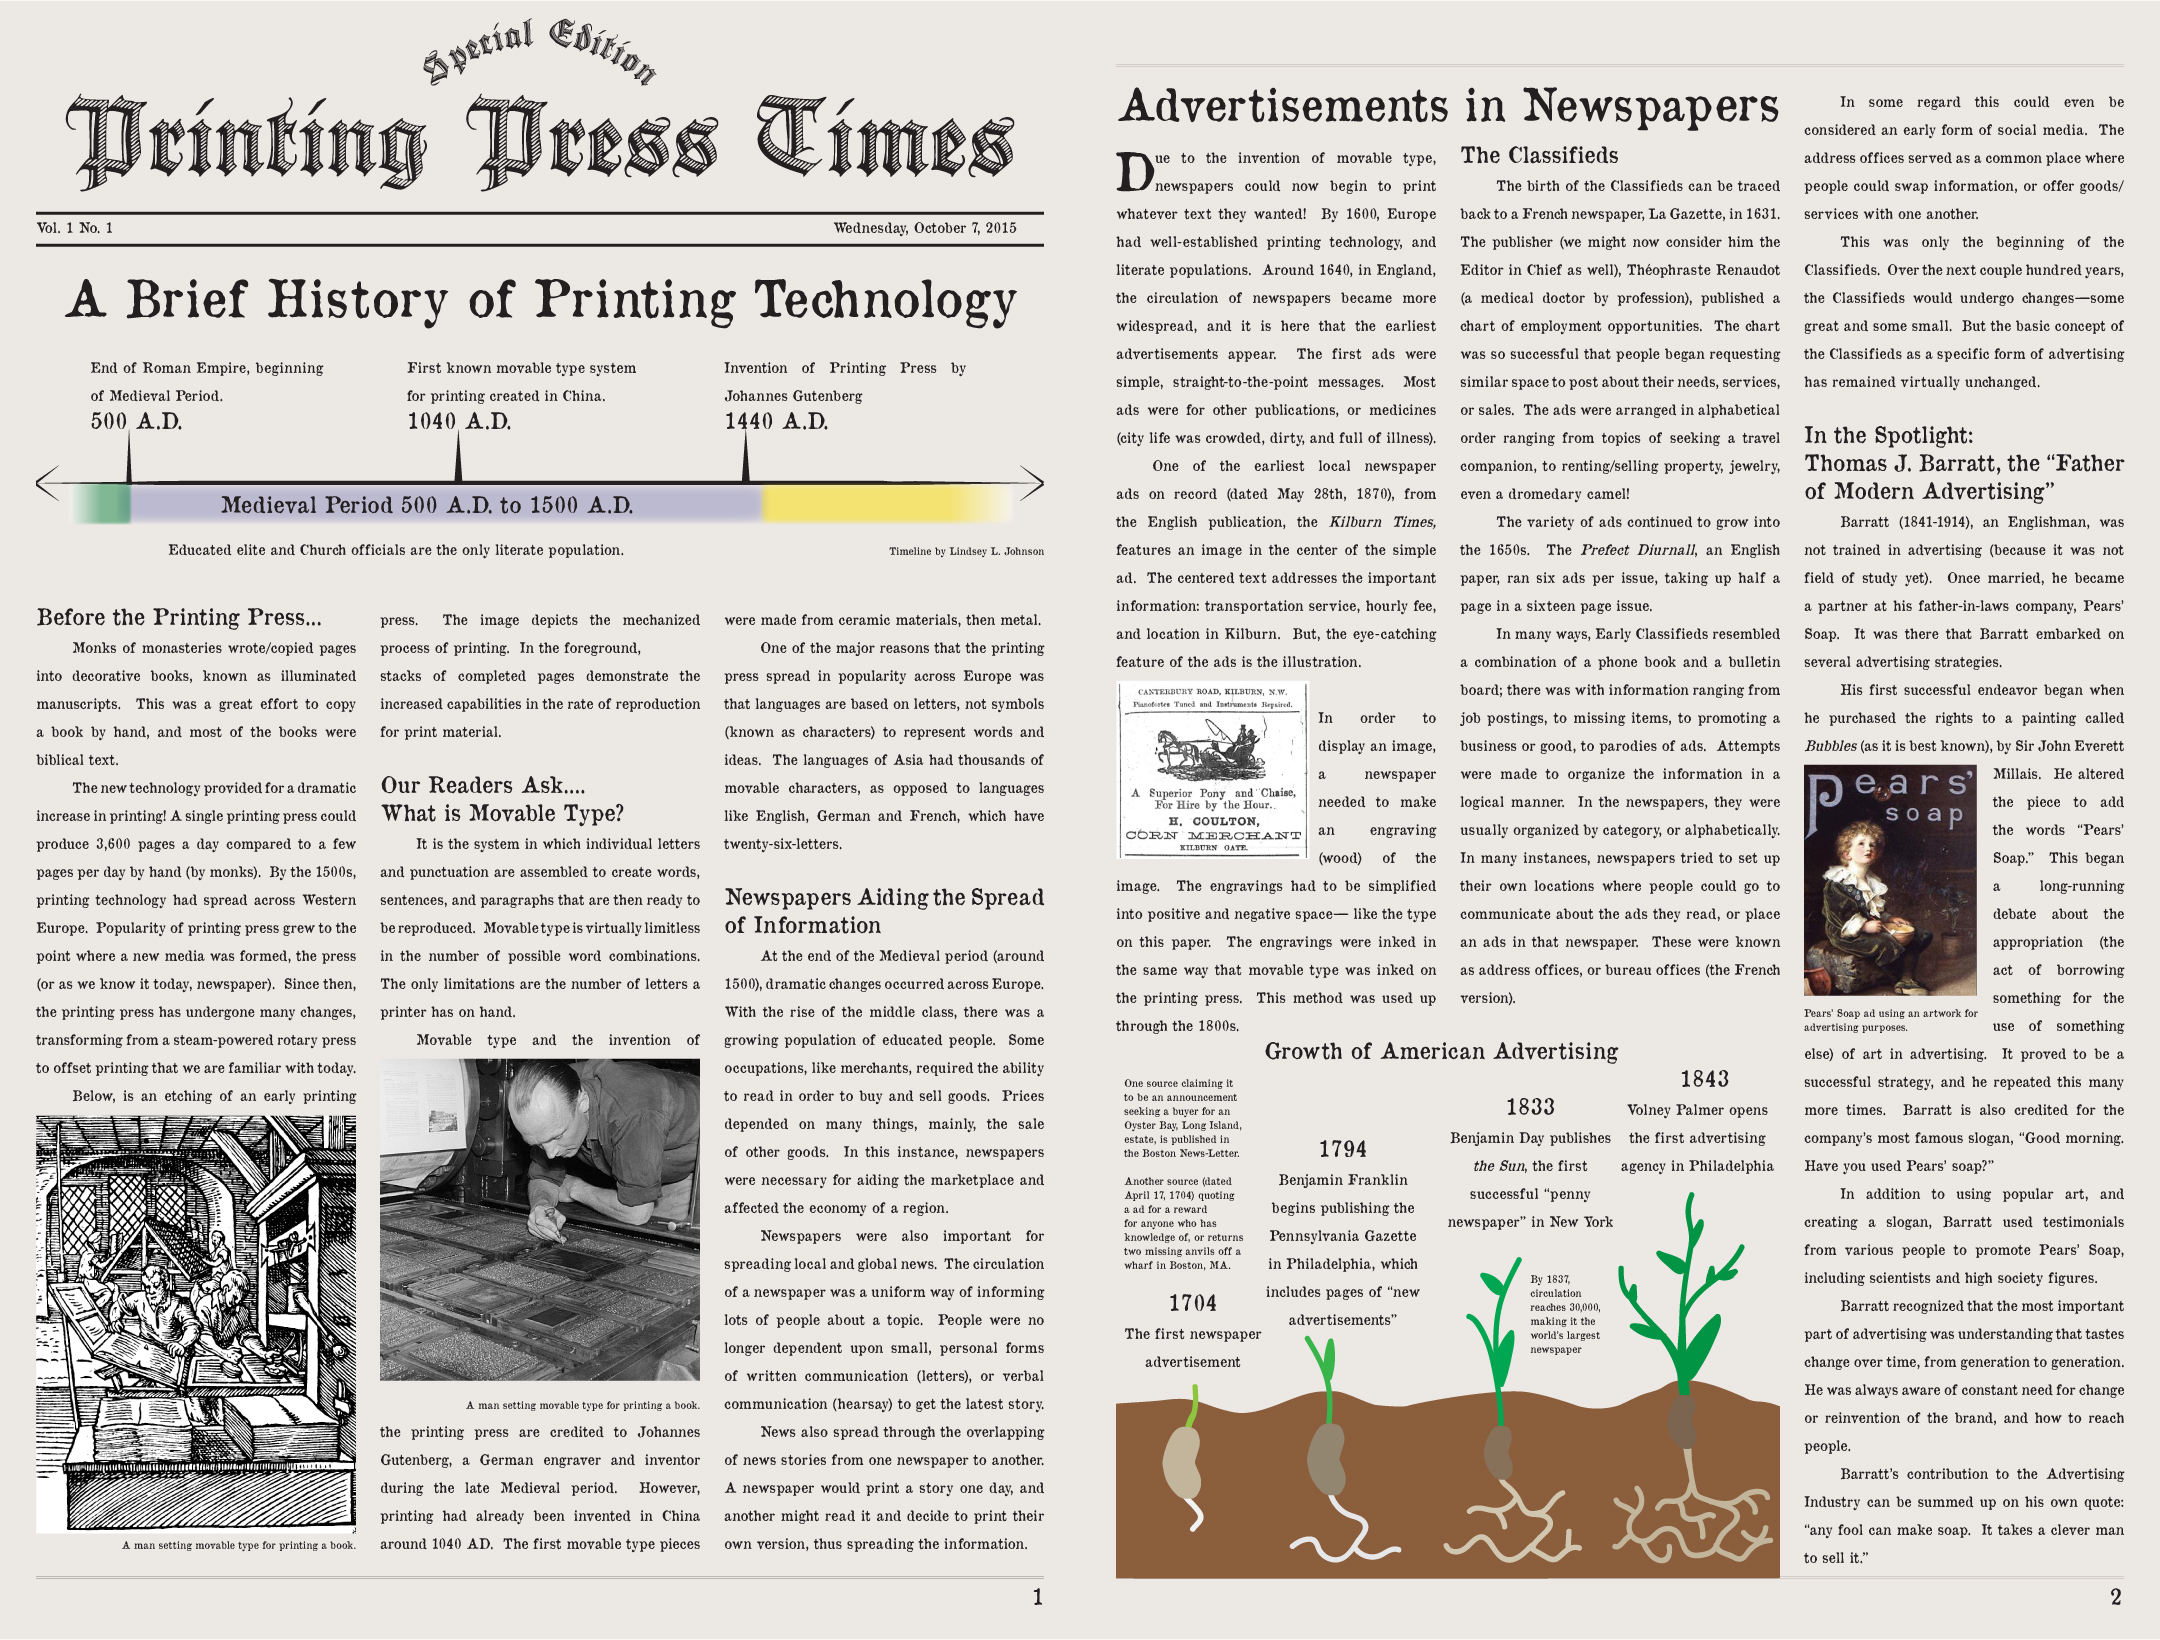 Pre-Telegraphic Era 'Newspaper'